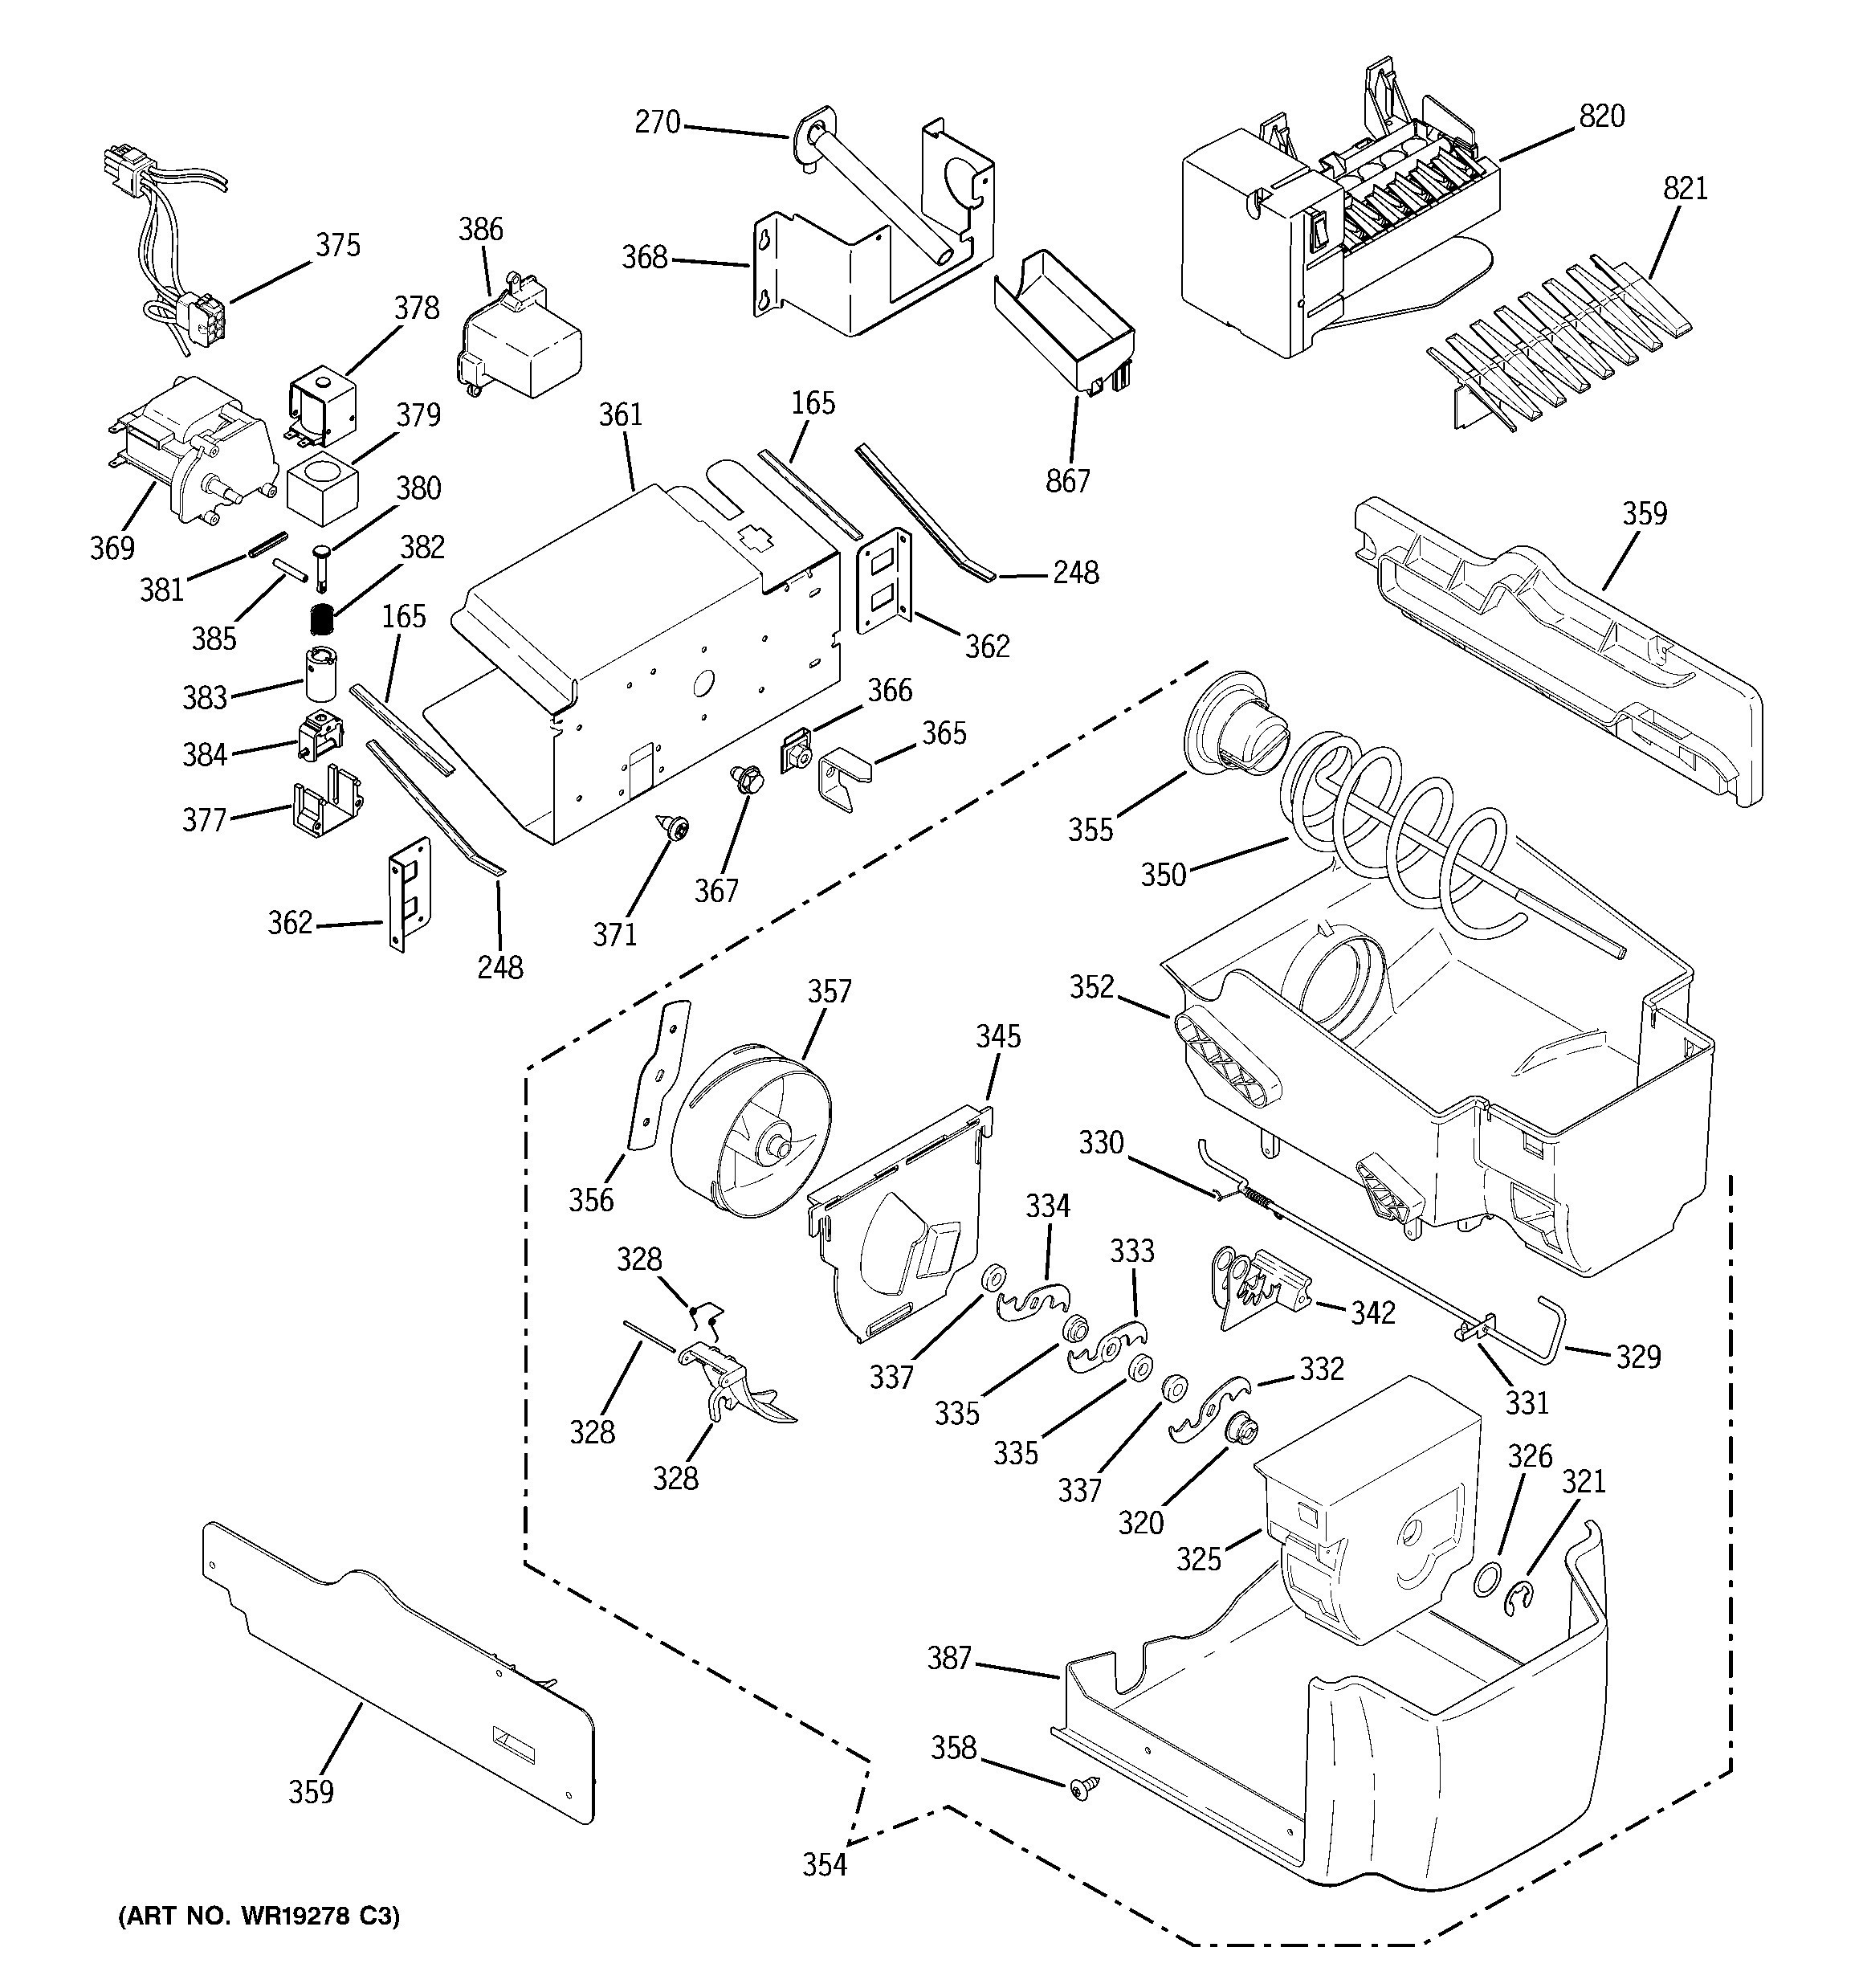 Ge Monogram Ice Maker Parts Diagram Wiring Diagram for Ge Ice Maker Wiring Library Of Ge Monogram Ice Maker Parts Diagram